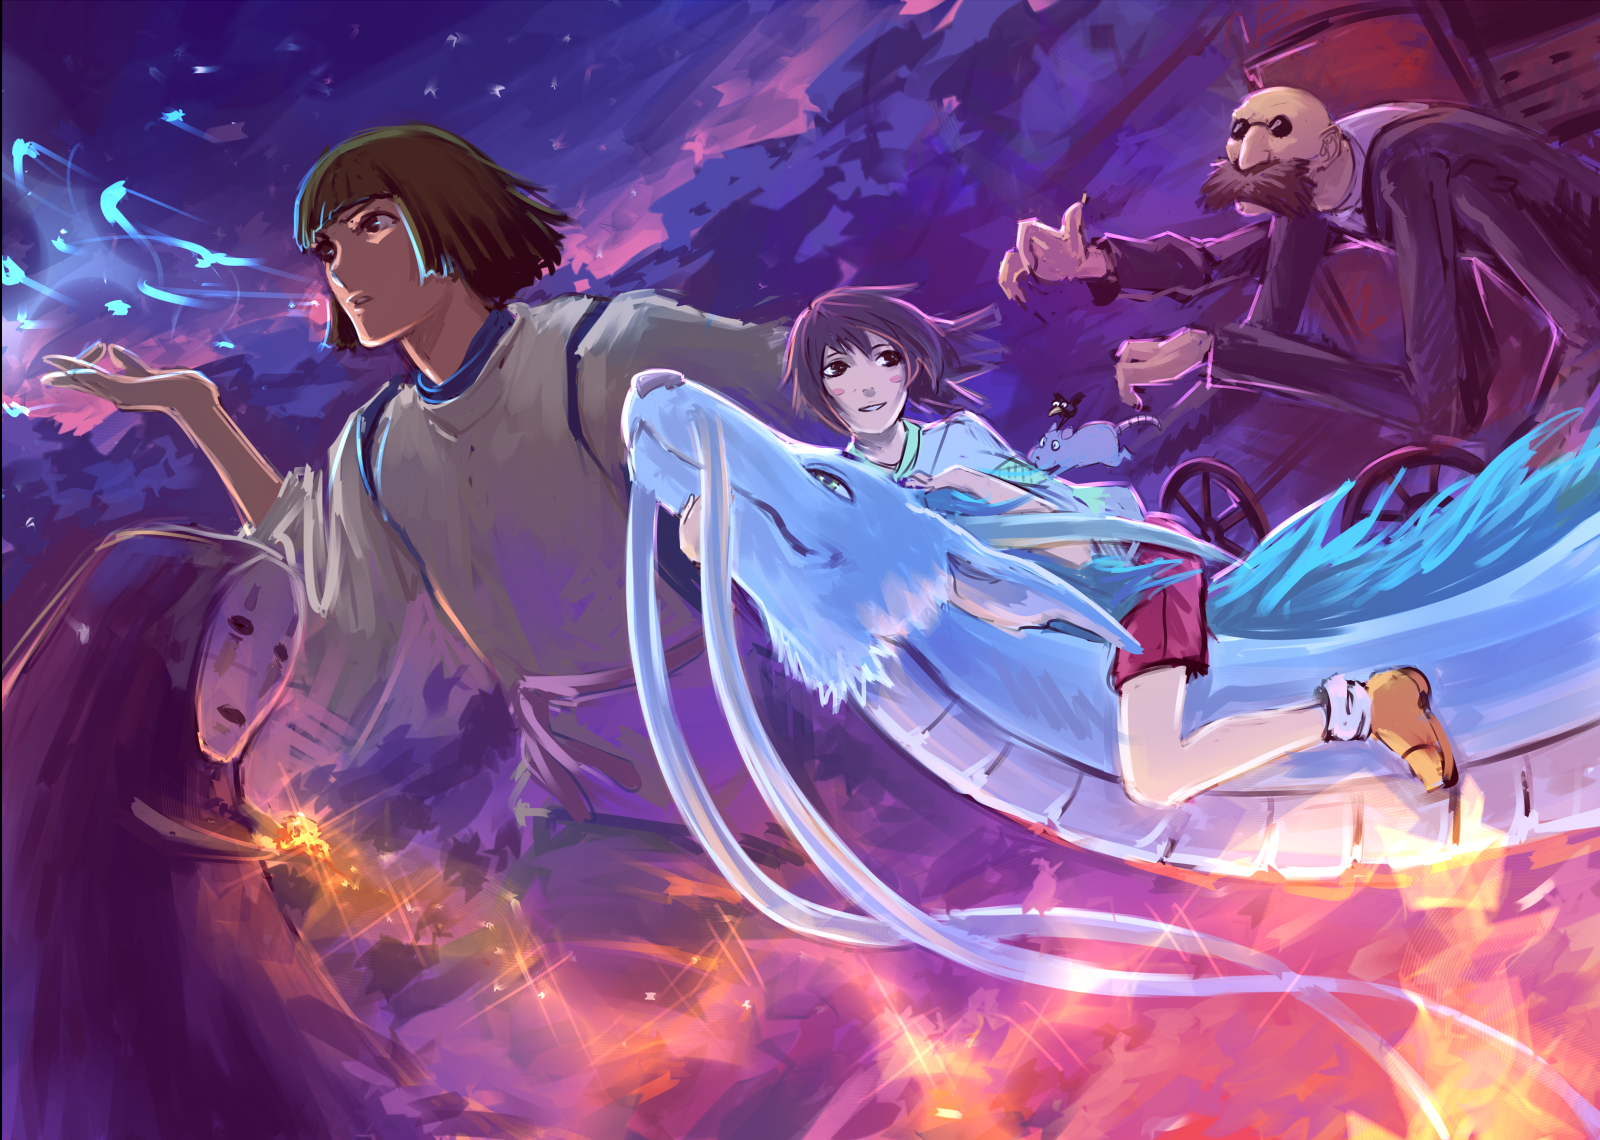 Chihiro's Adventures In The Fantasy World of "Spirited Away"